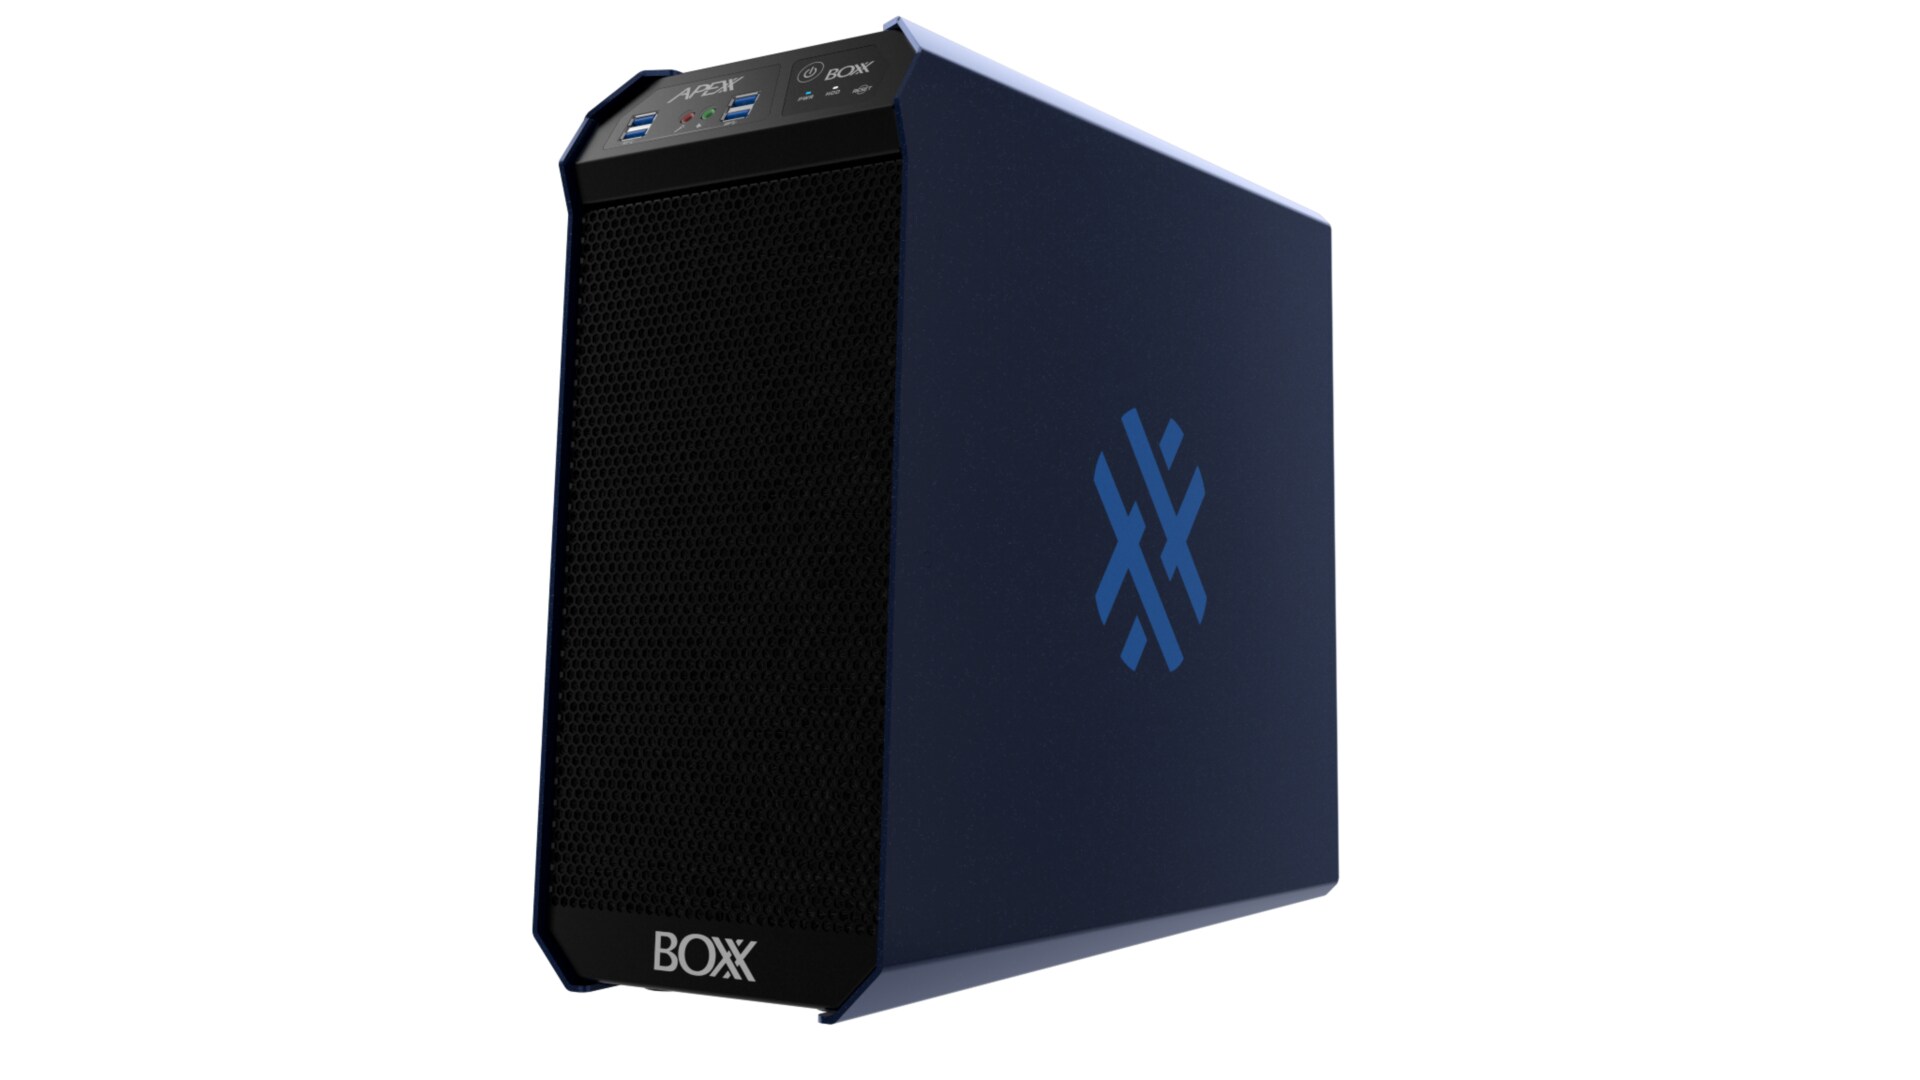 BOXX APEXX Special Edition Core i7 64GB RAM 1TB Windows 10 Pro